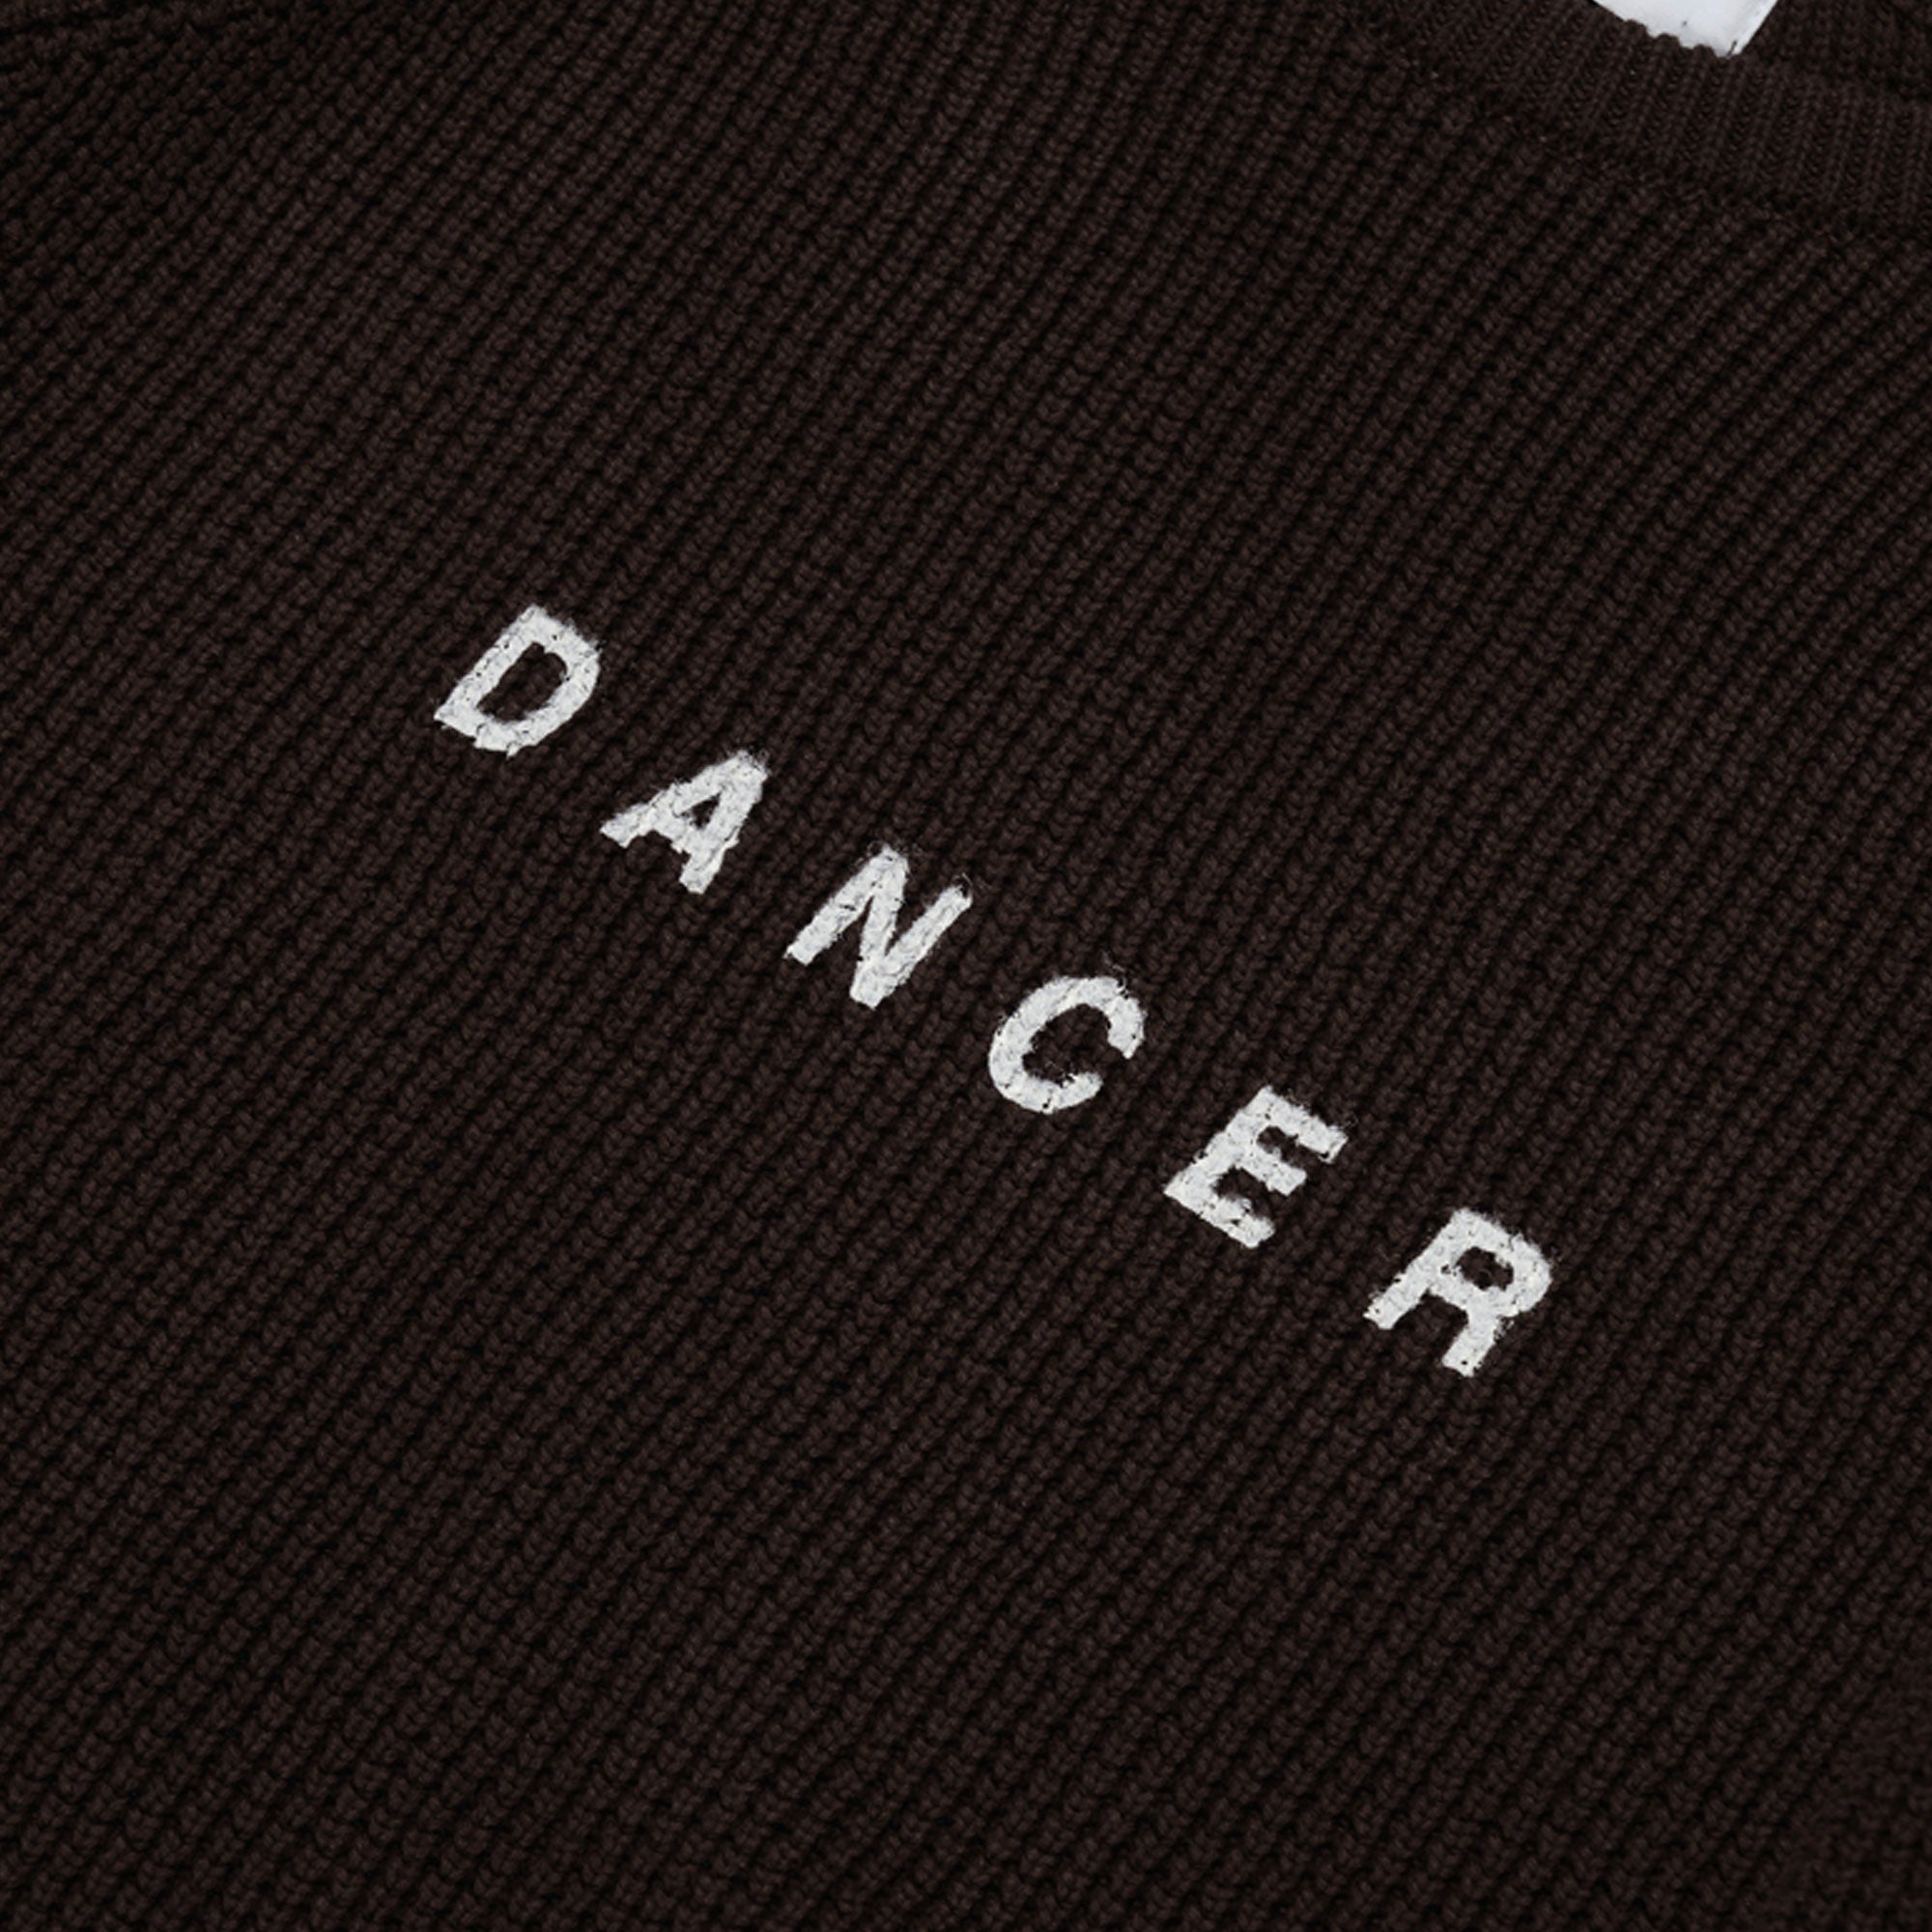 Dancer Logo Cotton Knit  - Brown